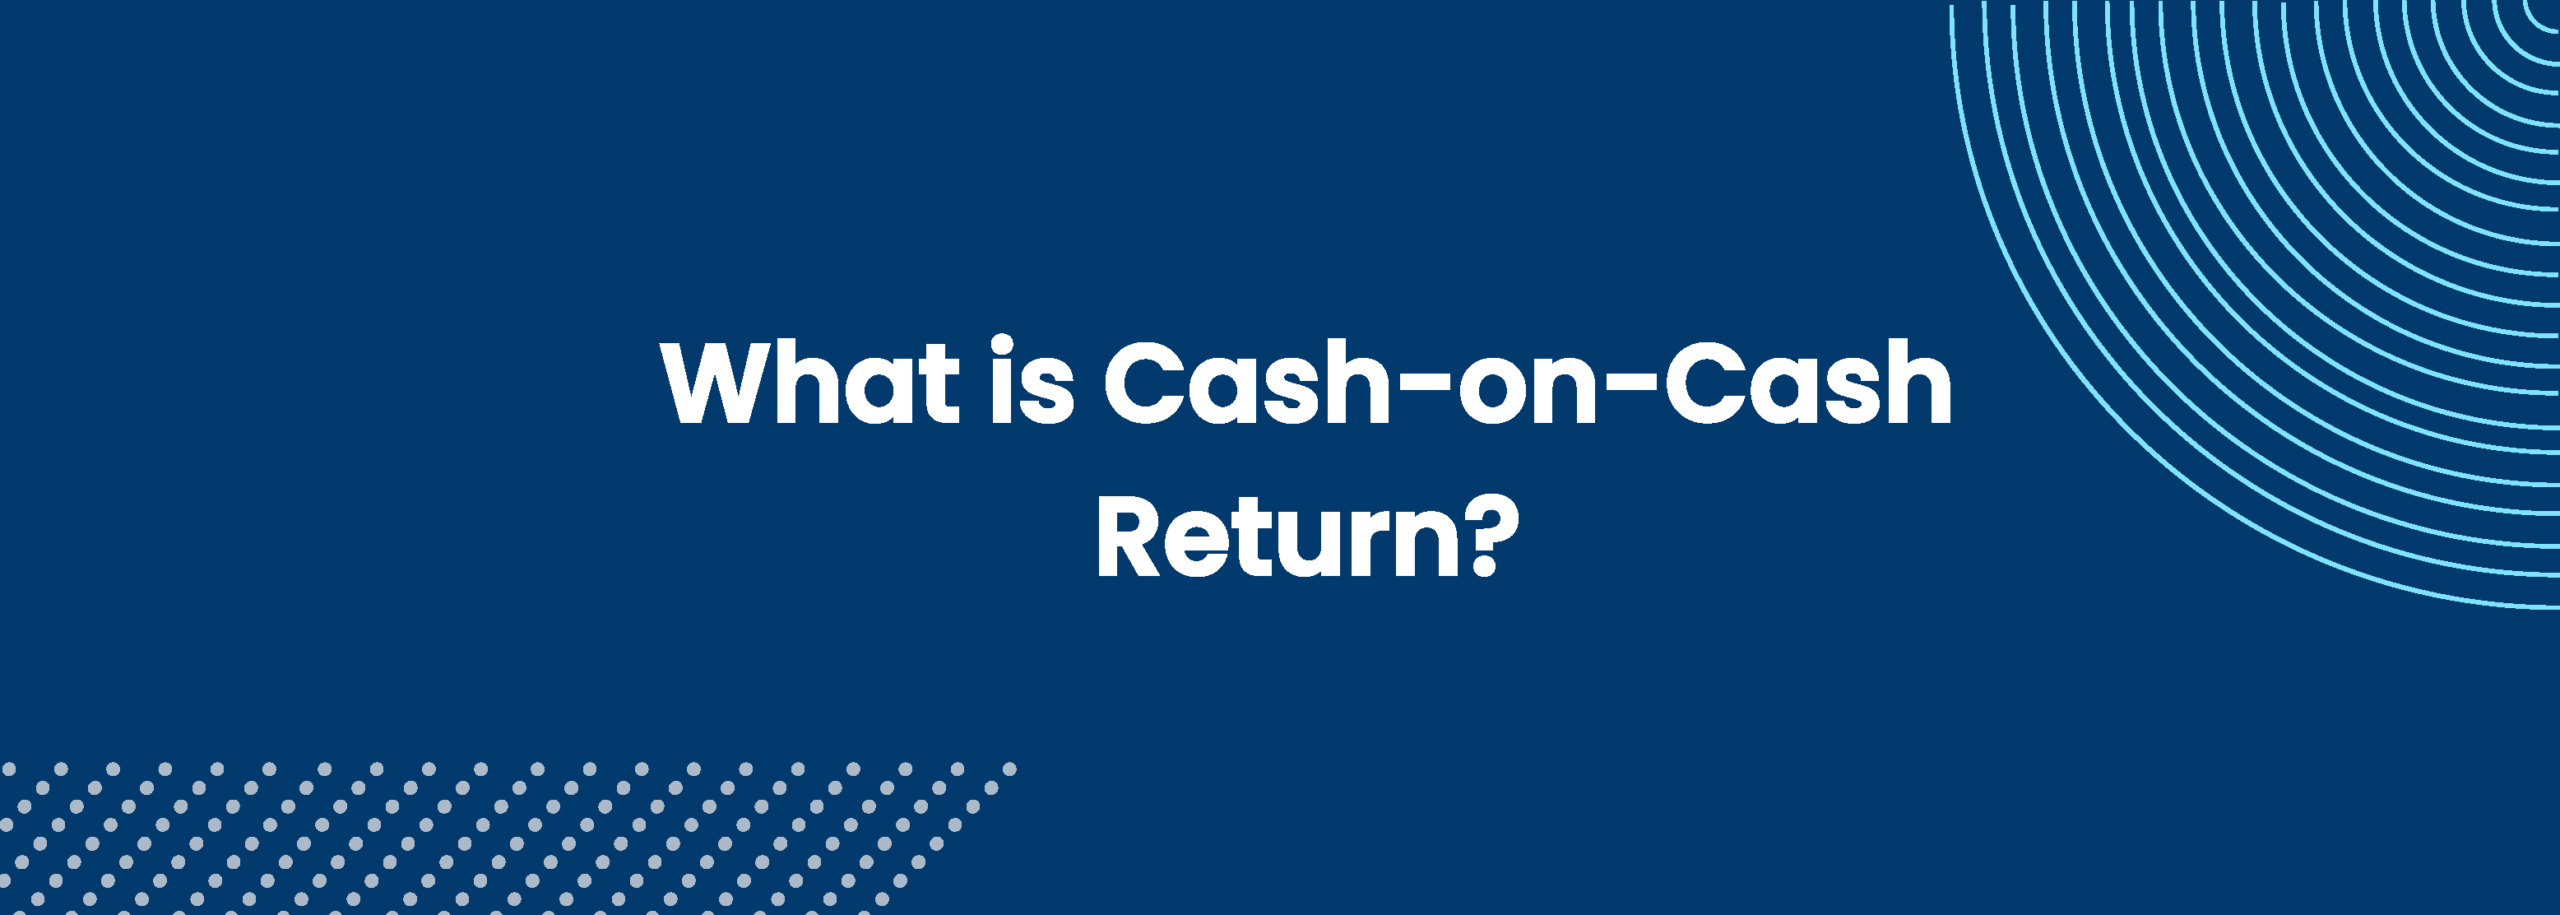 Cash-on-Cash Return